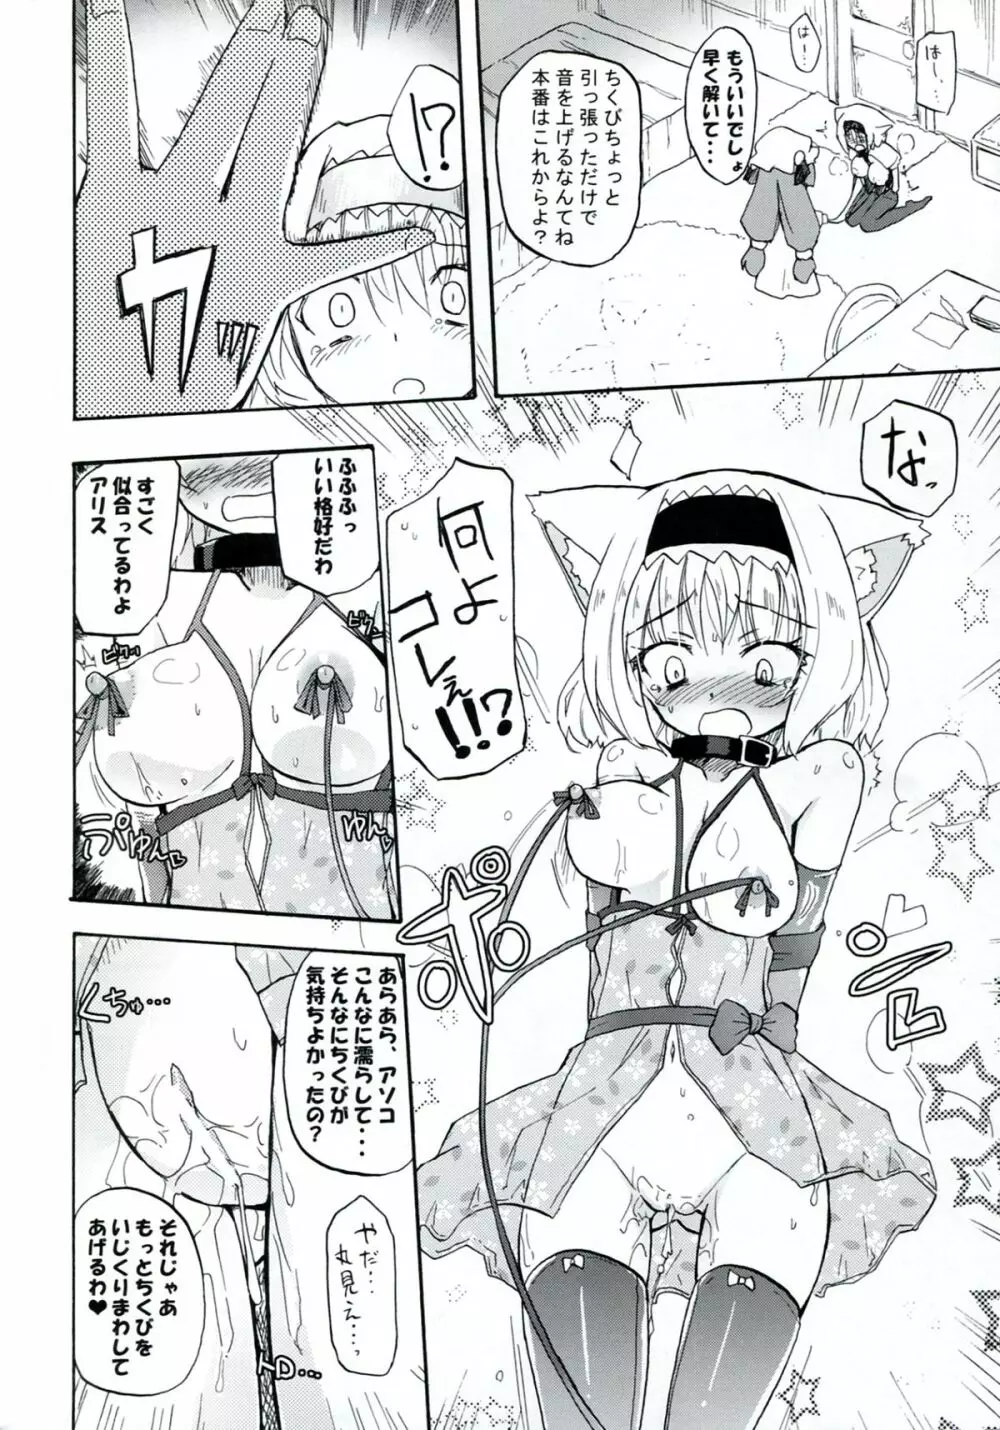 Homuraya Milk ★ Collection 2 - page16